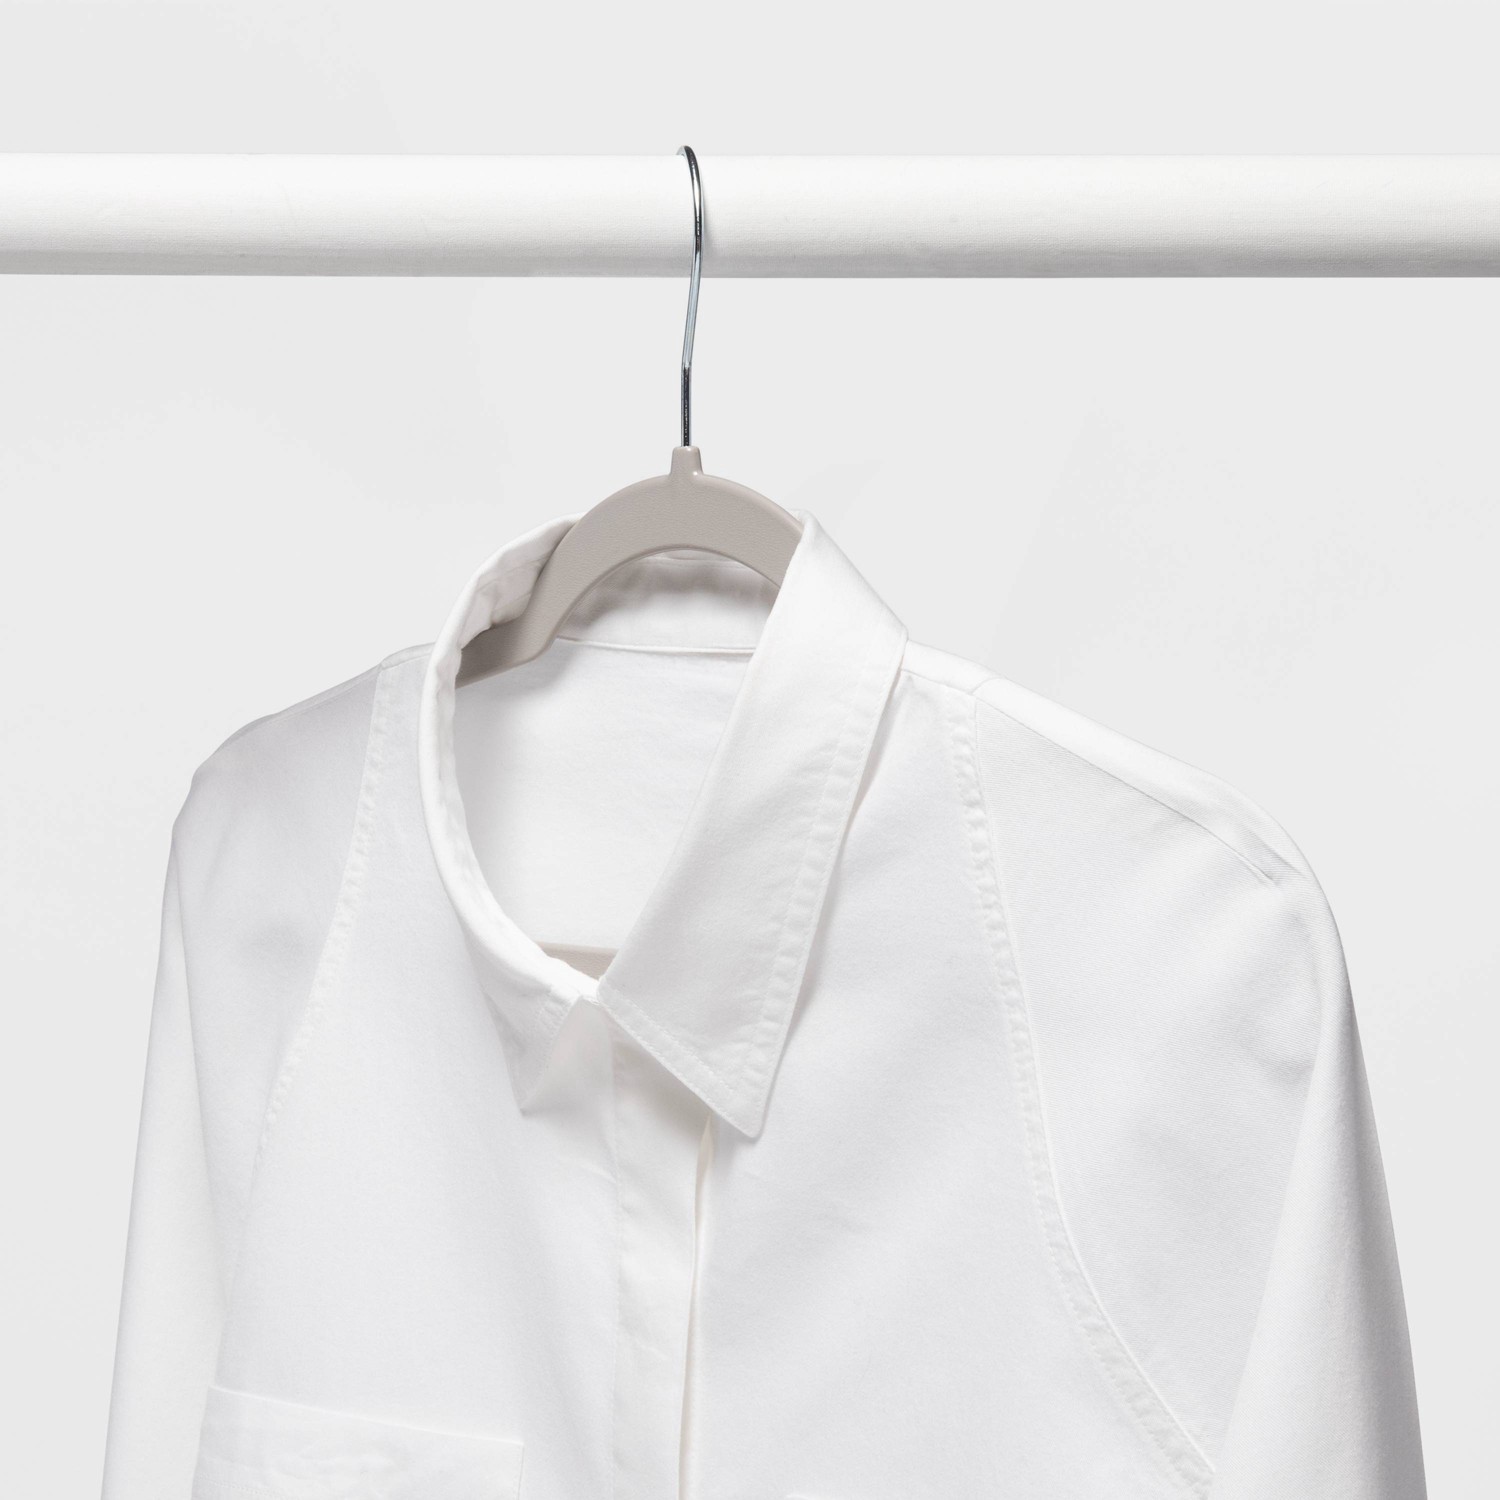 10pk Thin Plastic Hangers Gray - Brightroom™ : Target